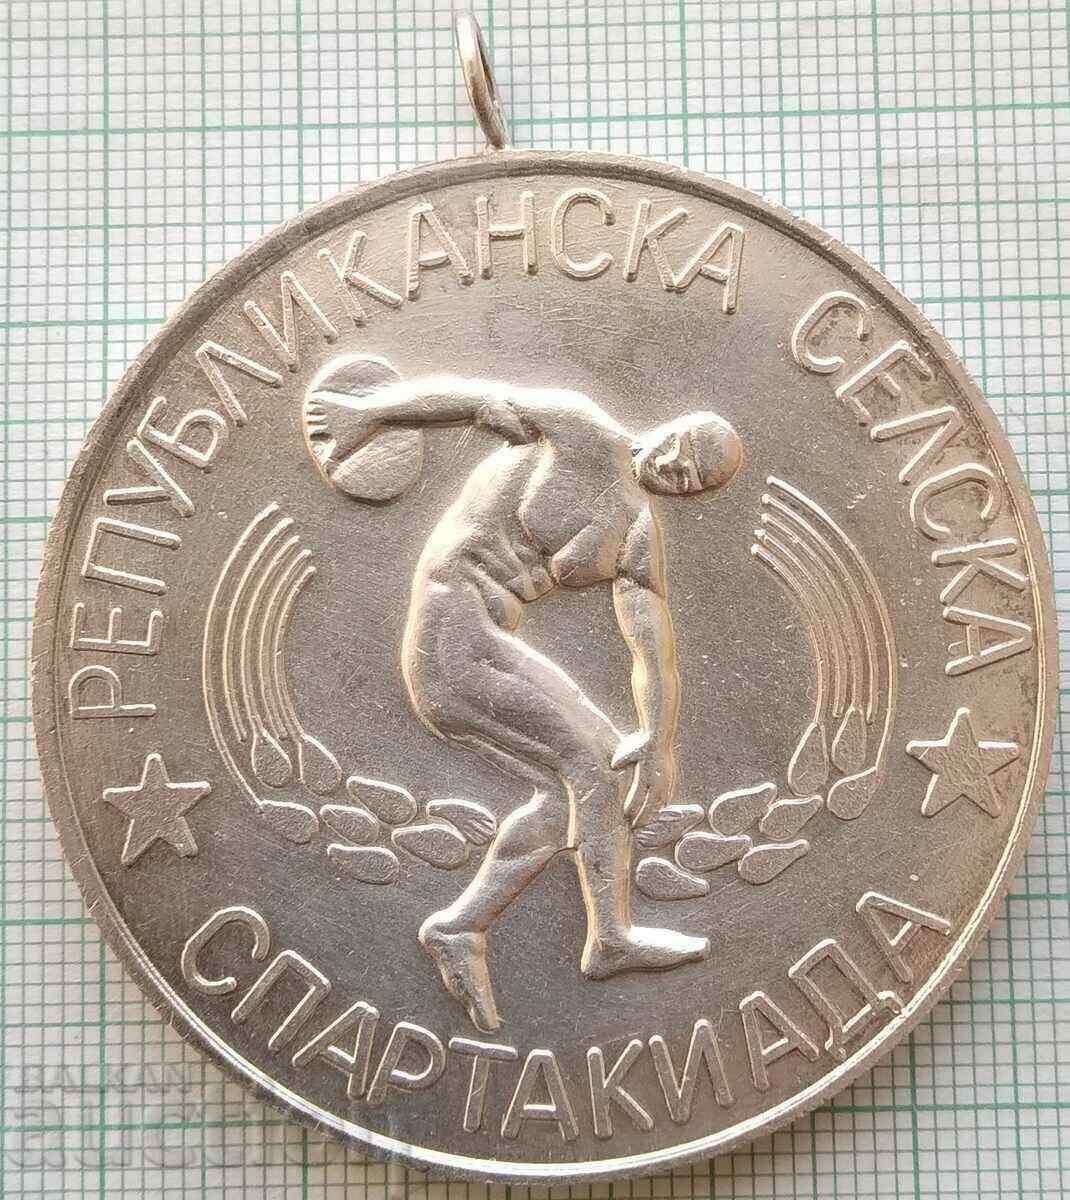 14973 Medalia Spartakiad - Pionierii 1975 - 50 mm